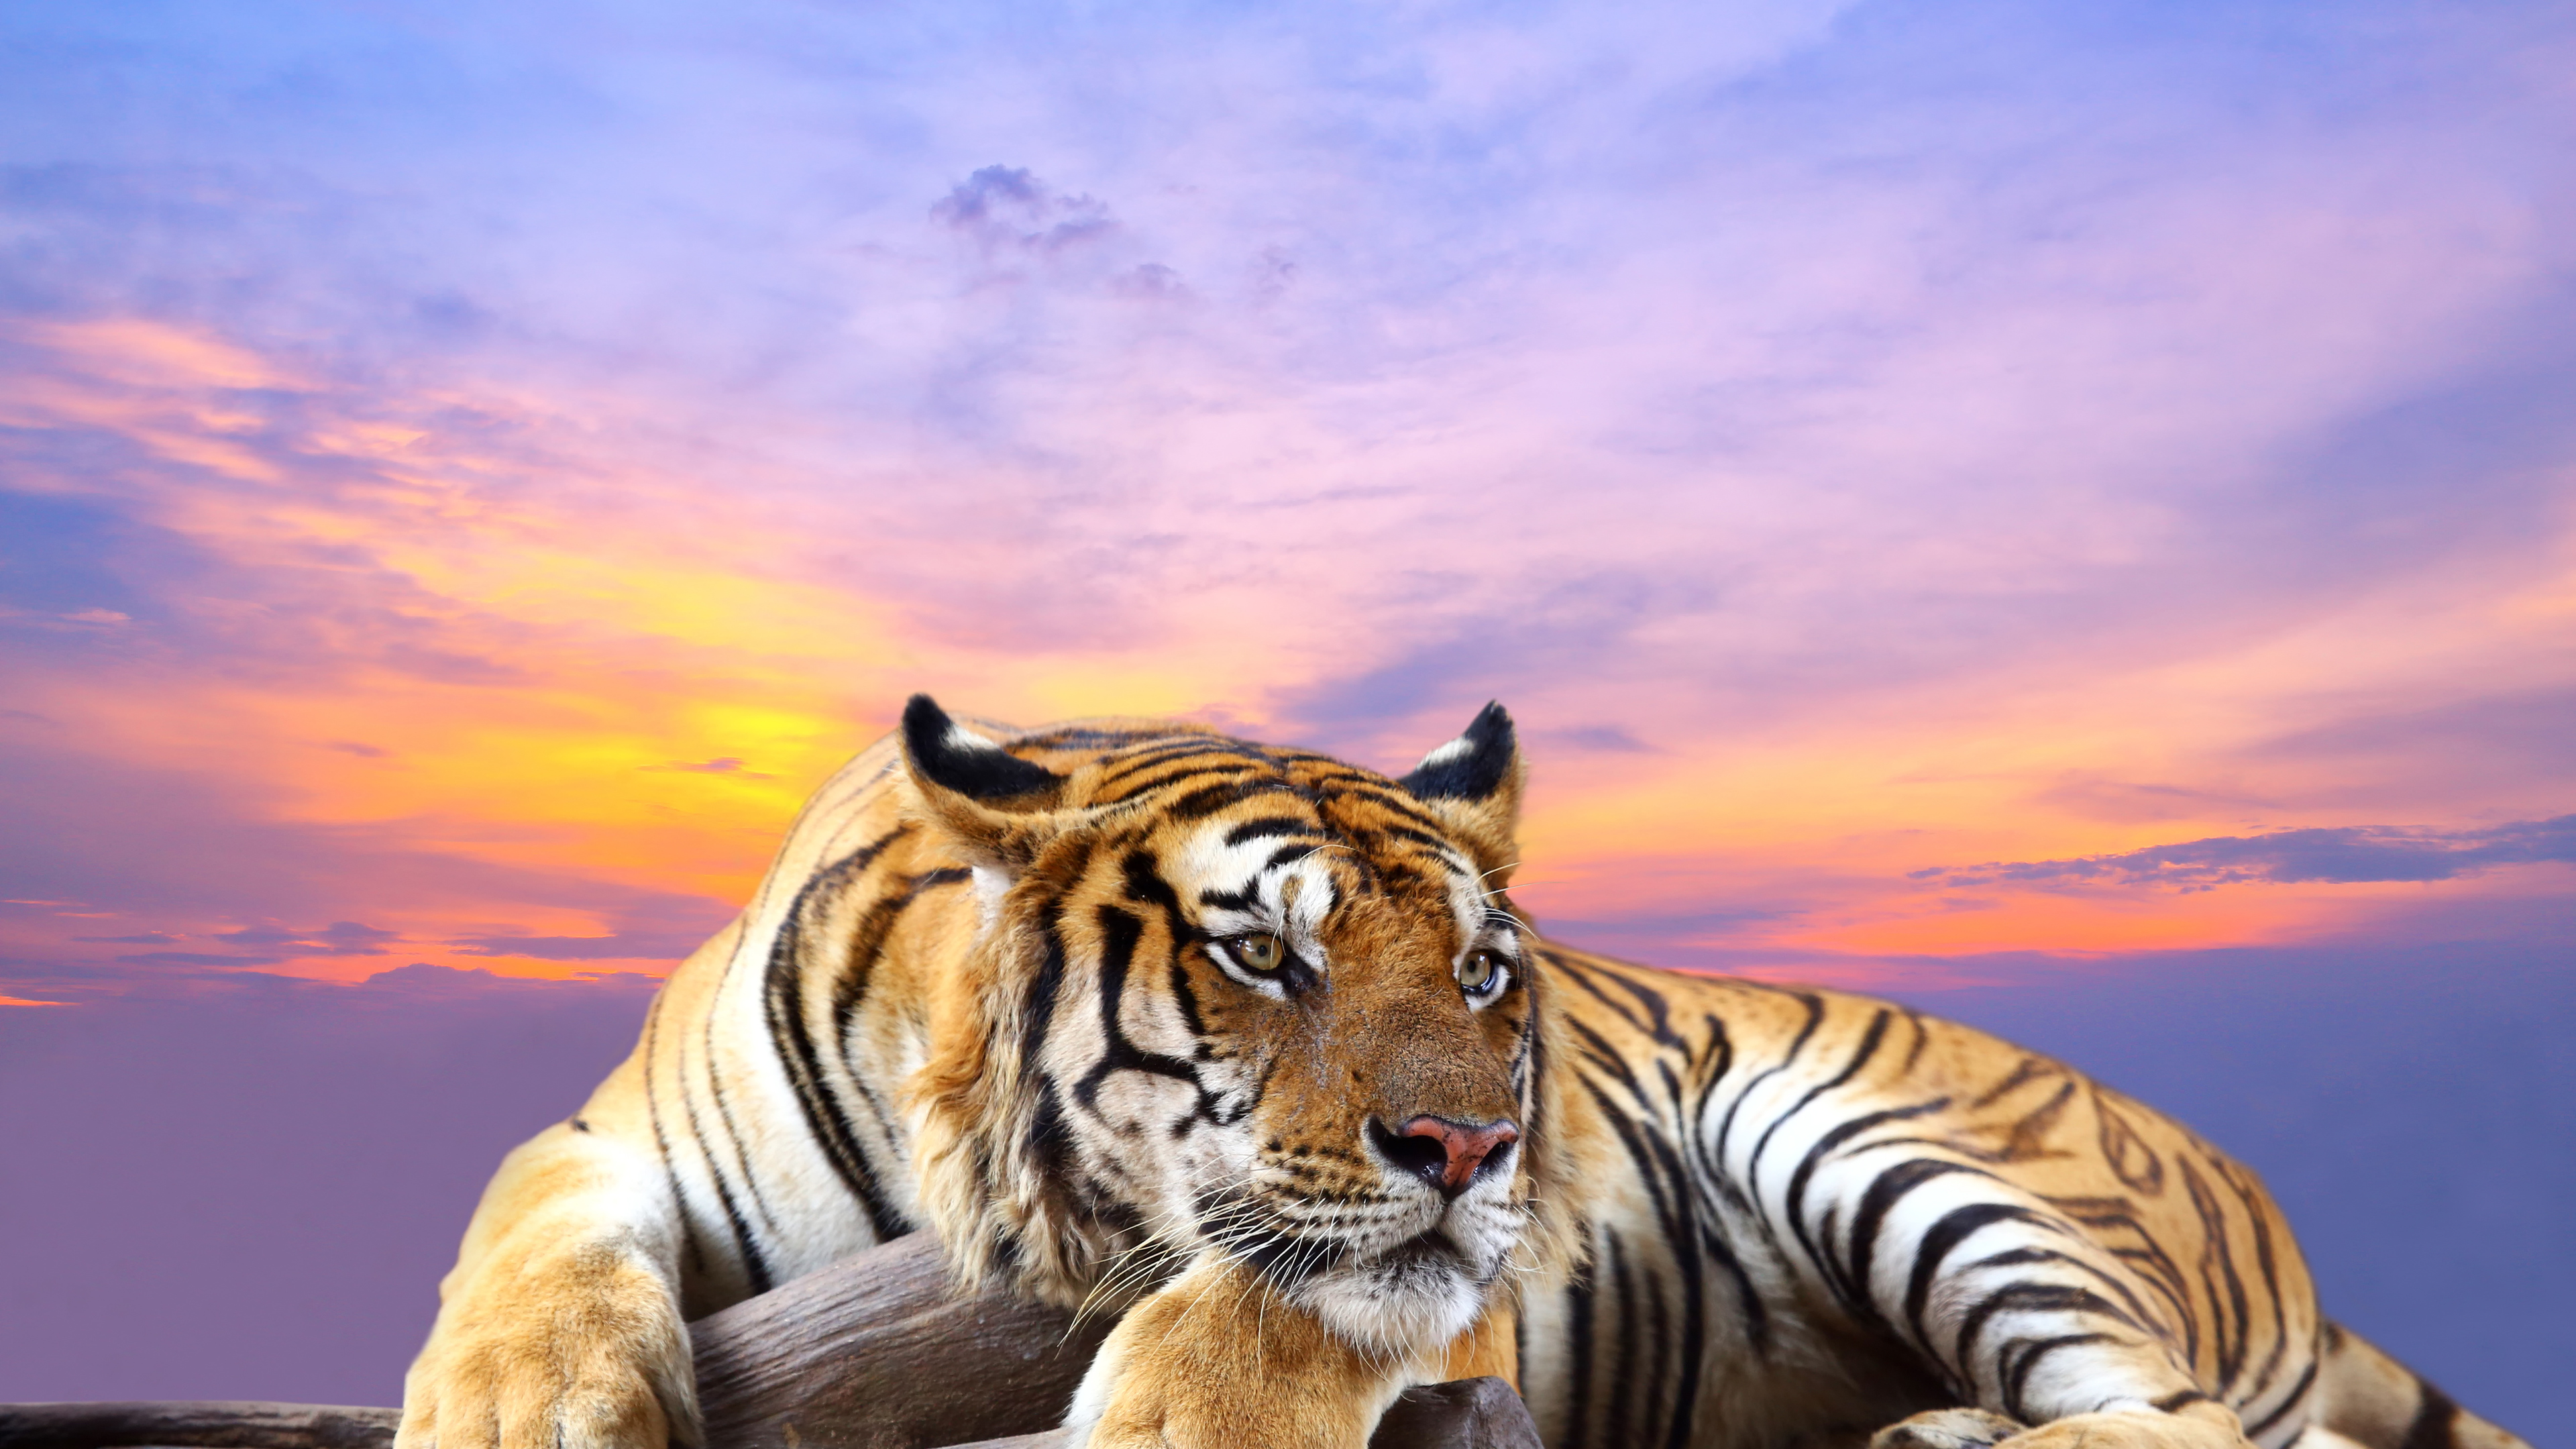 Cute Tiger 4k Ultra HD Wallpapers